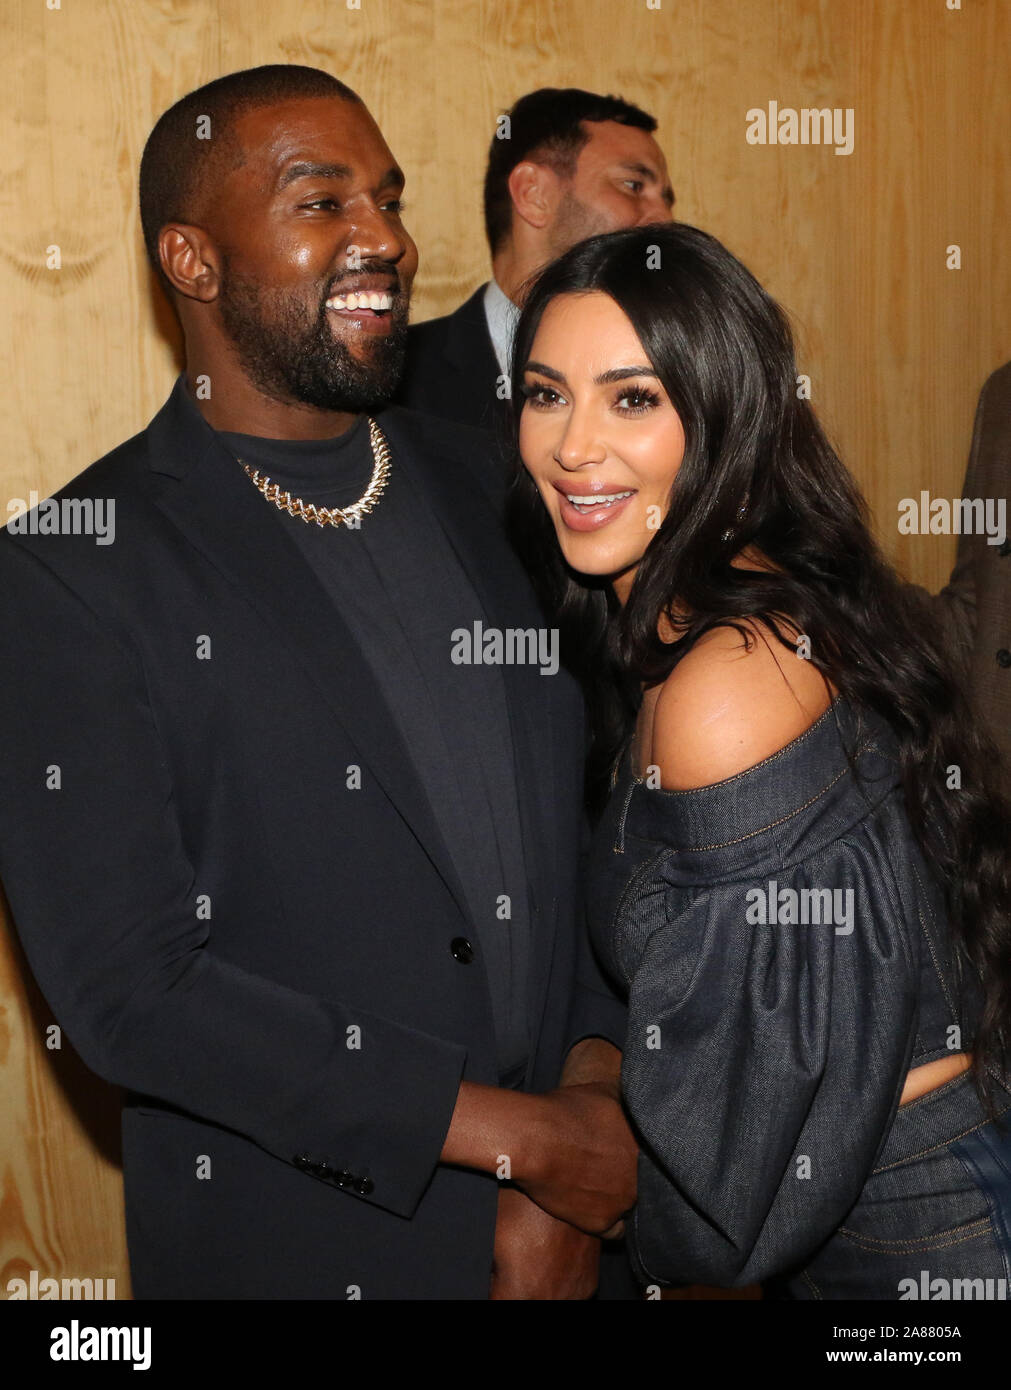 New York, NY, USA. 6th Nov, 2019. Kanye West & Kim Kardashian West attend  the Kanye West "Follow God" music video presentation at the Burberry Store,  November 6, 2019 in New York